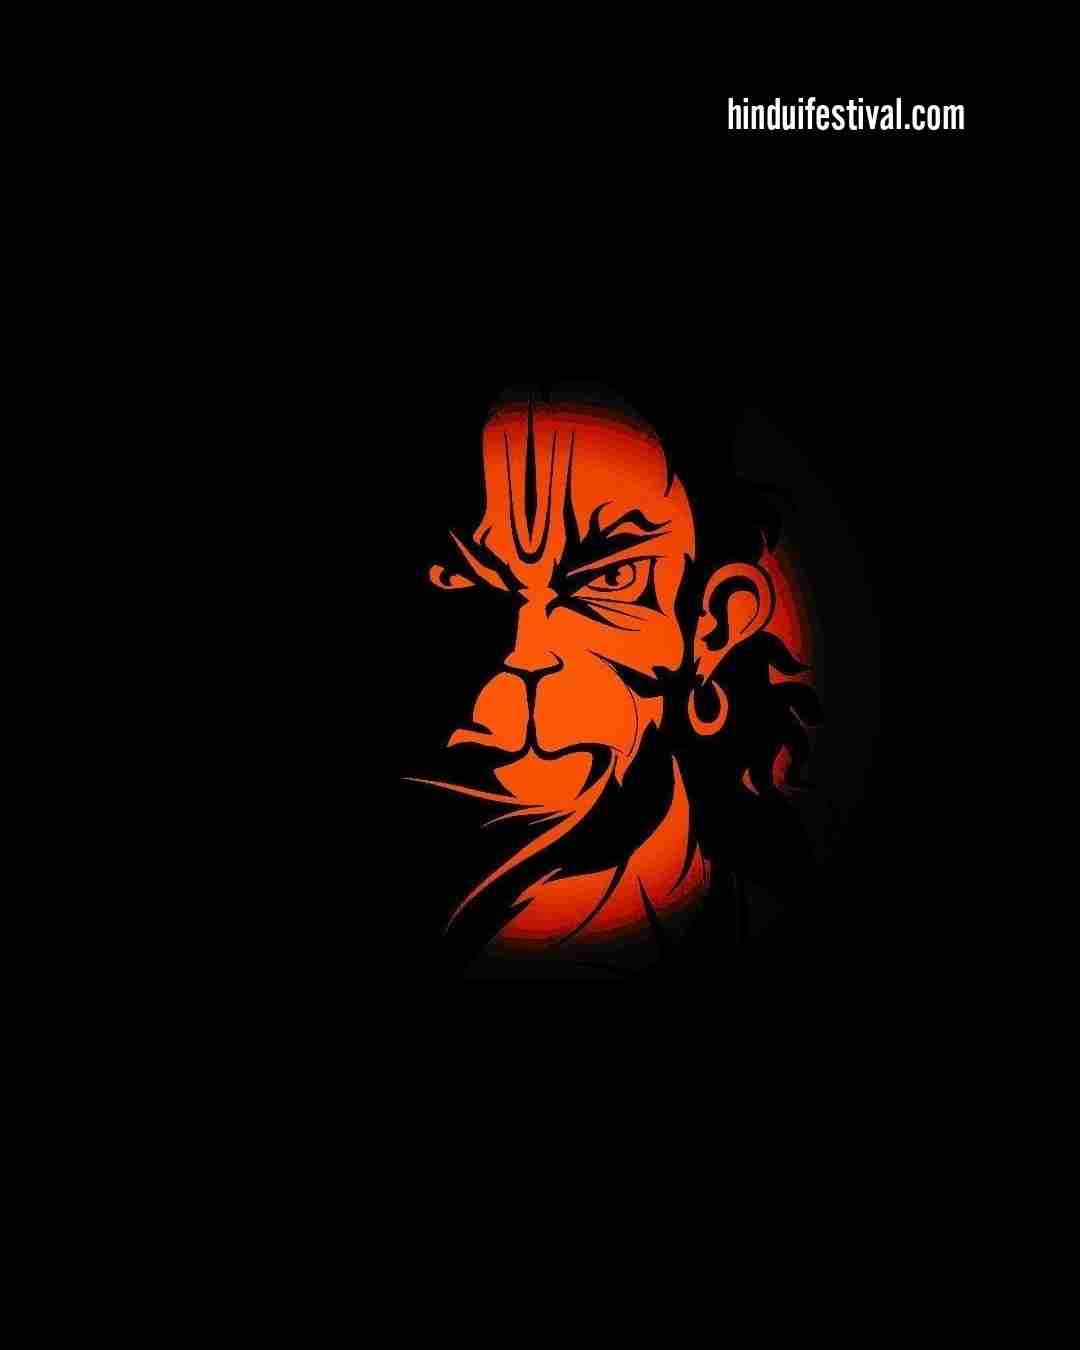 Angry Hanuman JI Wallpapers - Top Free Angry Hanuman JI Backgrounds ...